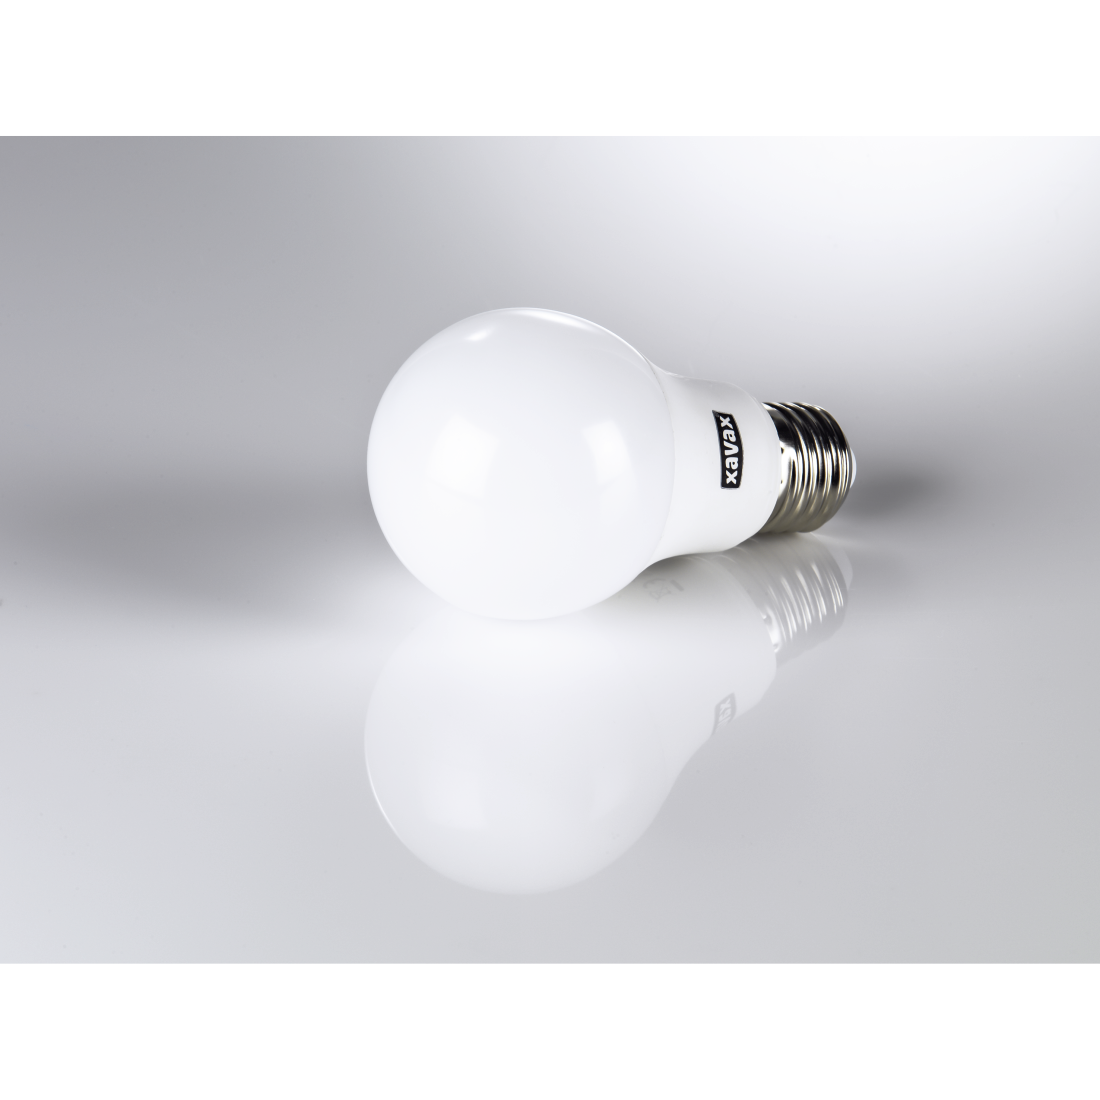 abx3 Druckfähige Abbildung 3 - Xavax, LED-Lampe, E27, 470lm ersetzt 40W, Glühlampe, Warmweiß, dimmbar